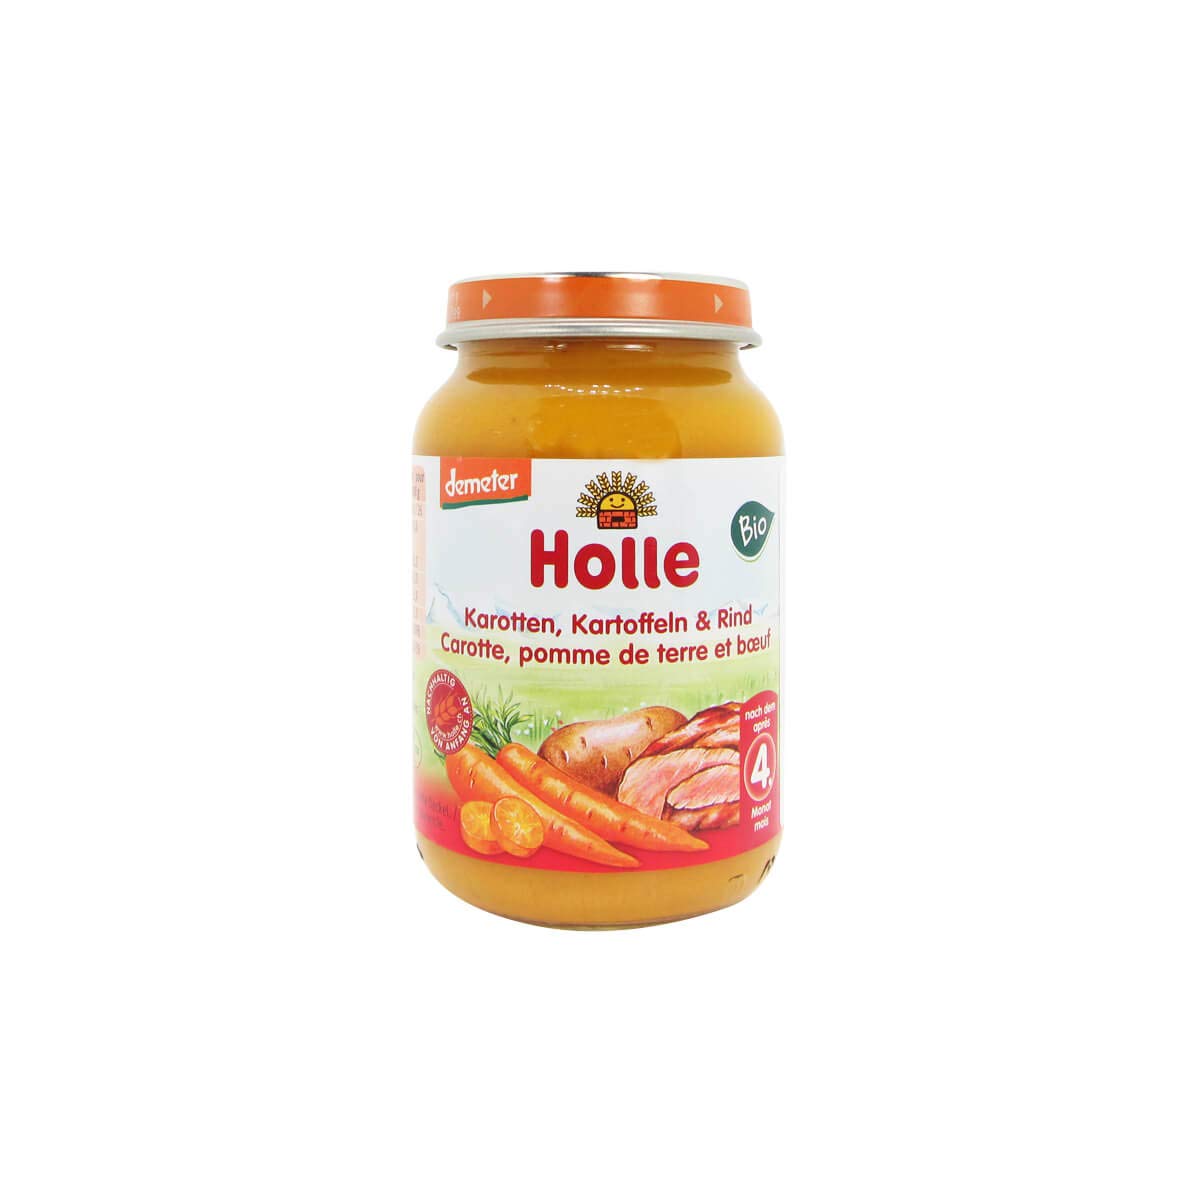 Holle Baby Food - Carrots Potatoes & Beef, Demeter, 190 g